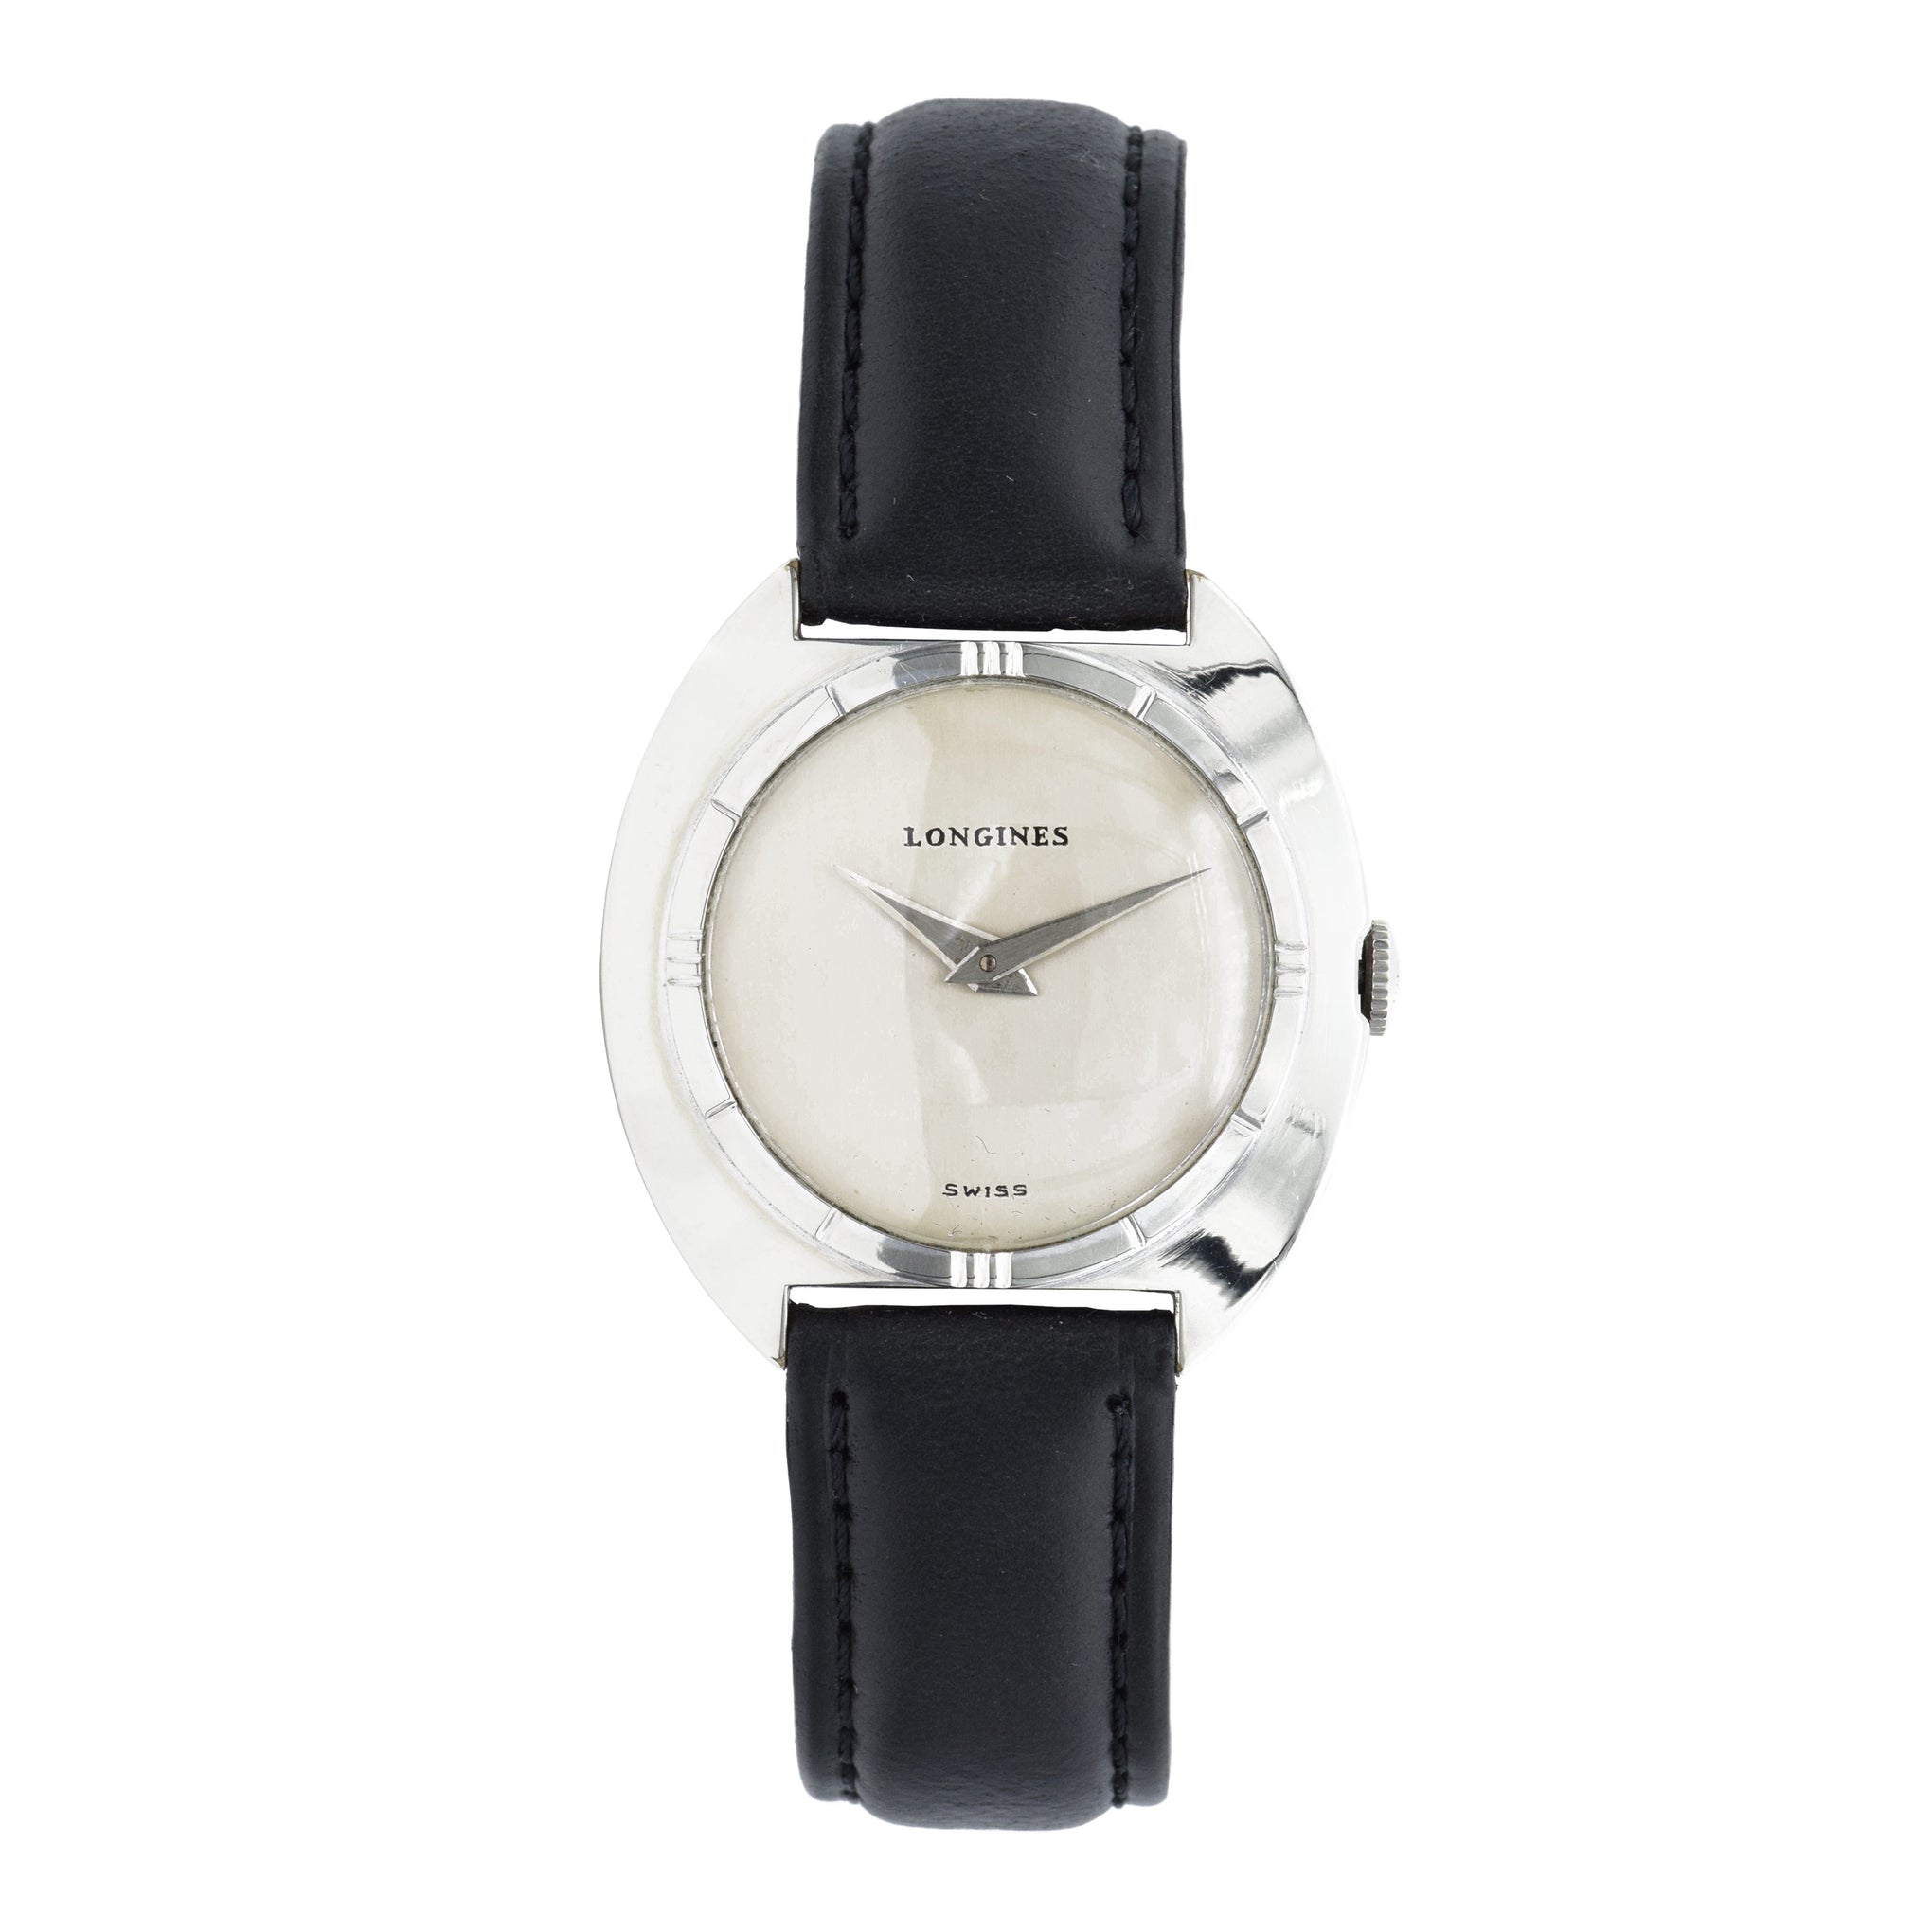 Vintage 1950s Longines Watch